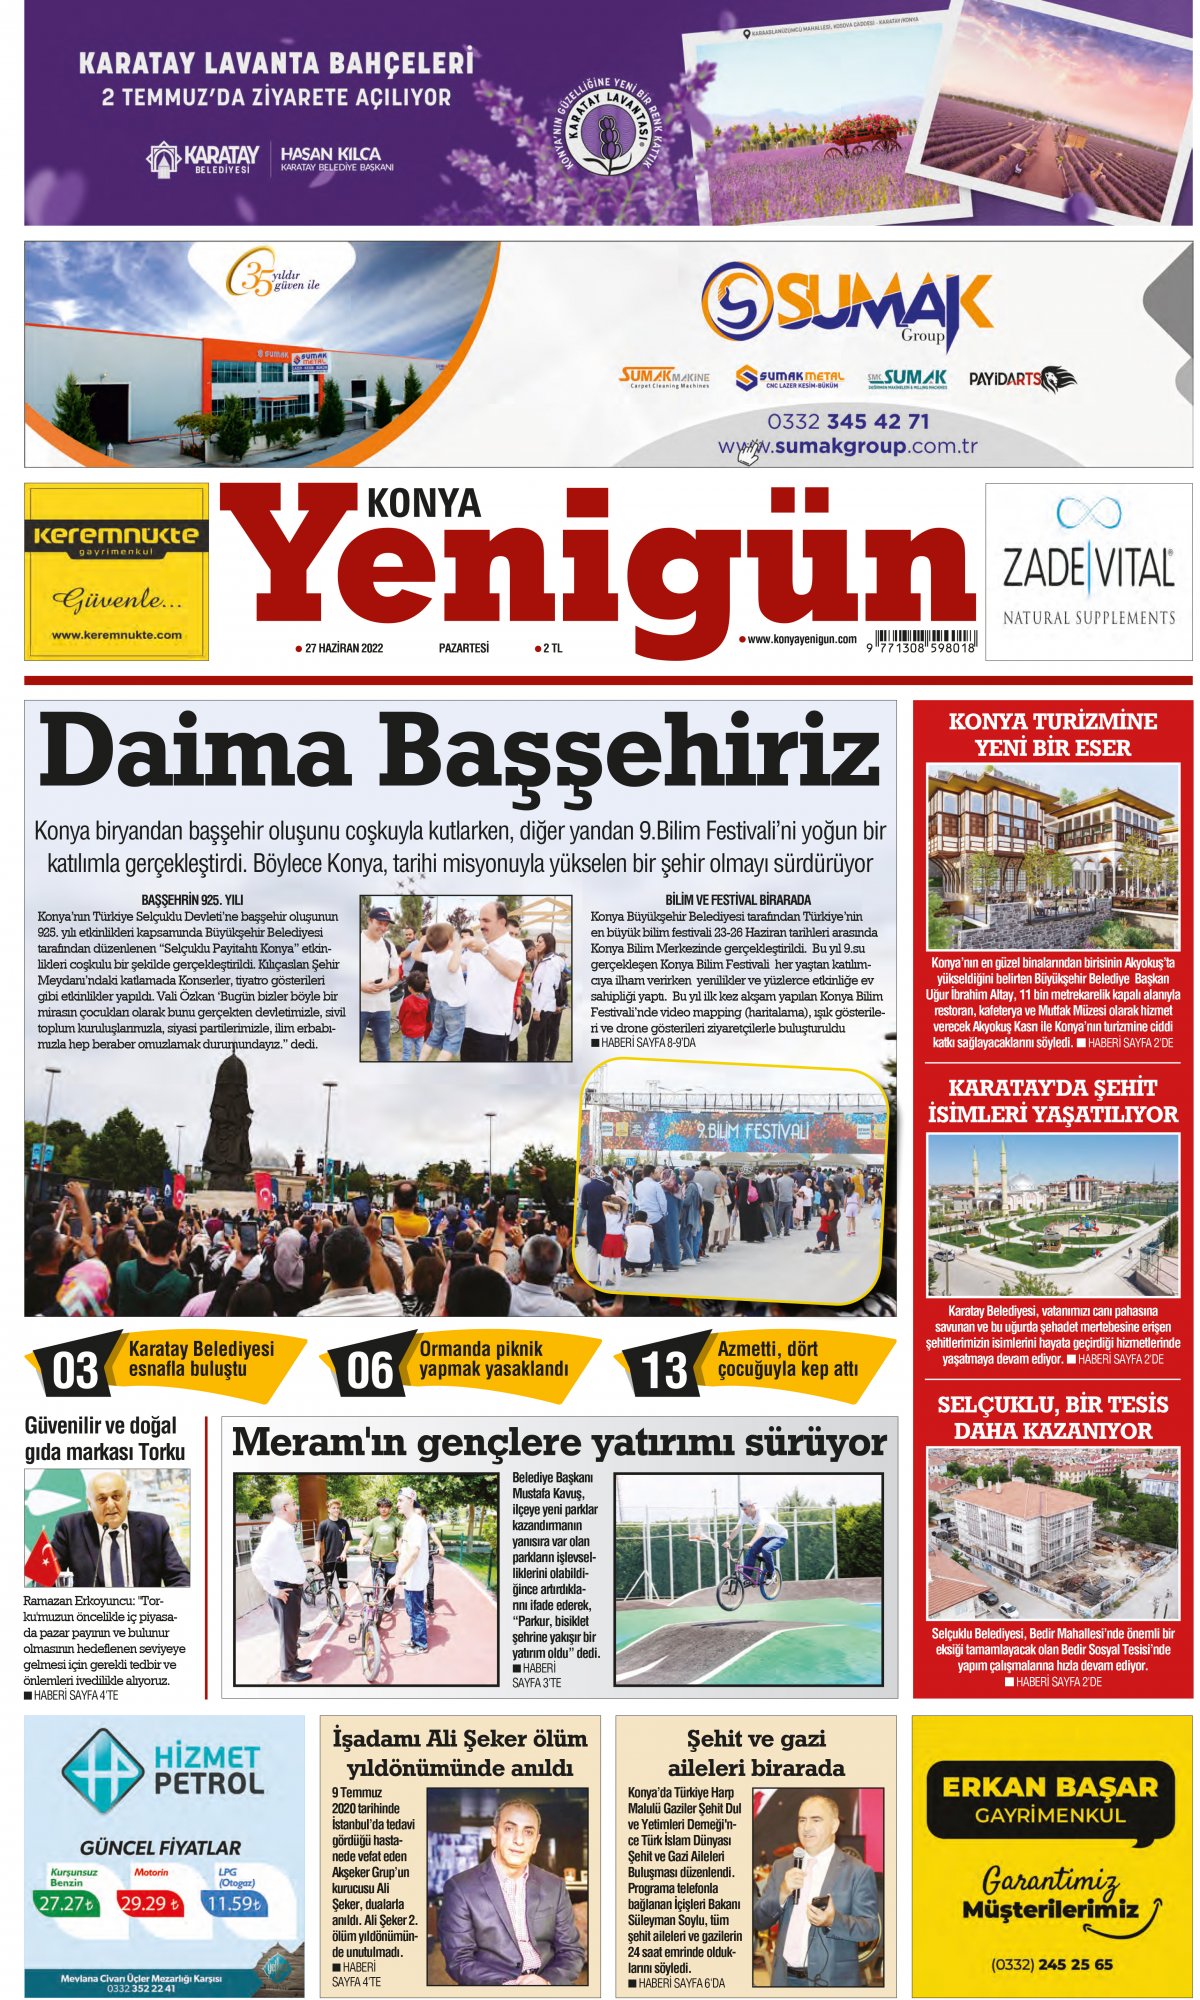 Konya Yenigün Gazetesi - 27.06.2022 Manşeti